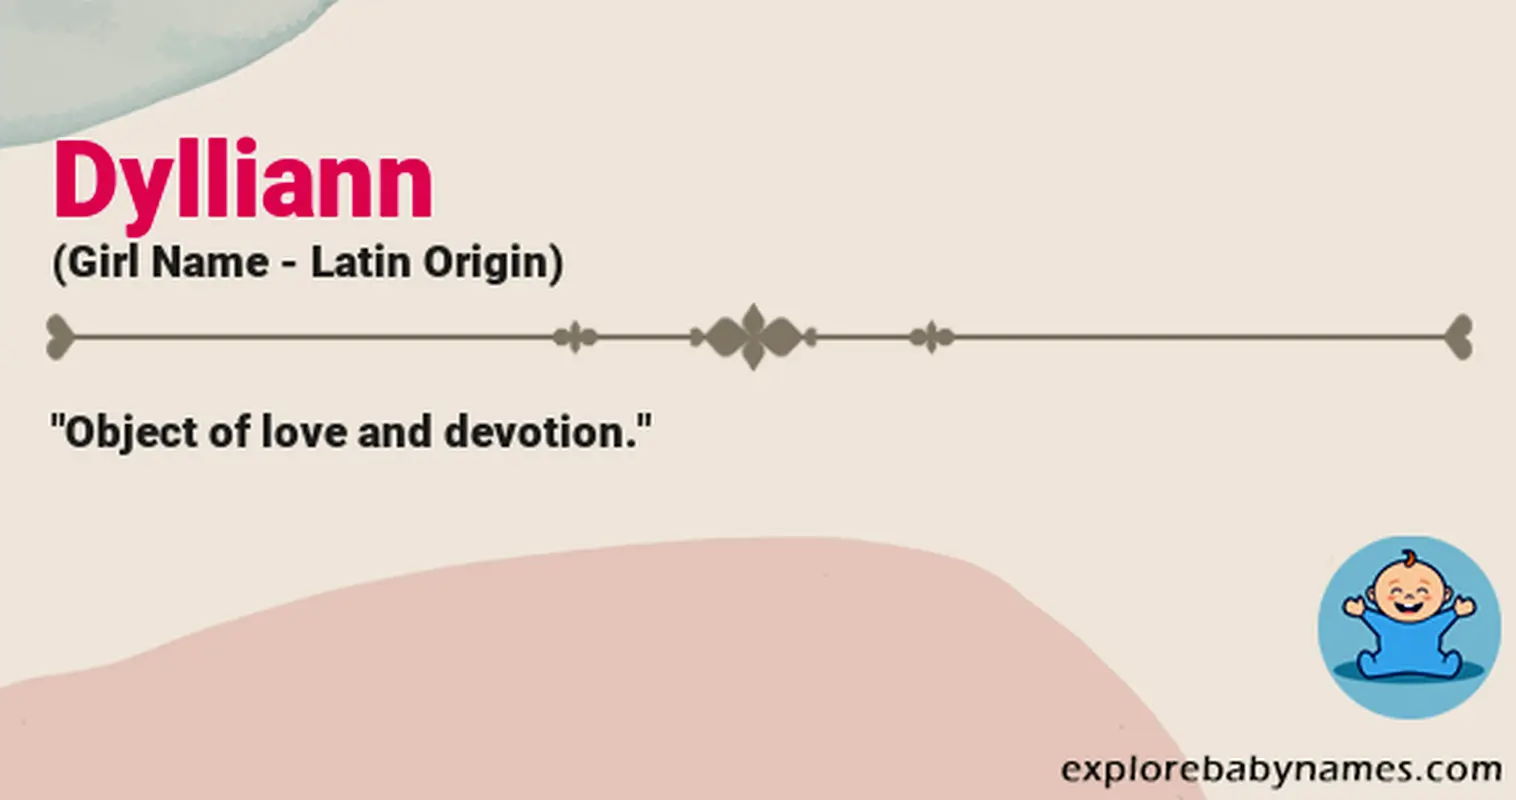 Meaning of Dylliann